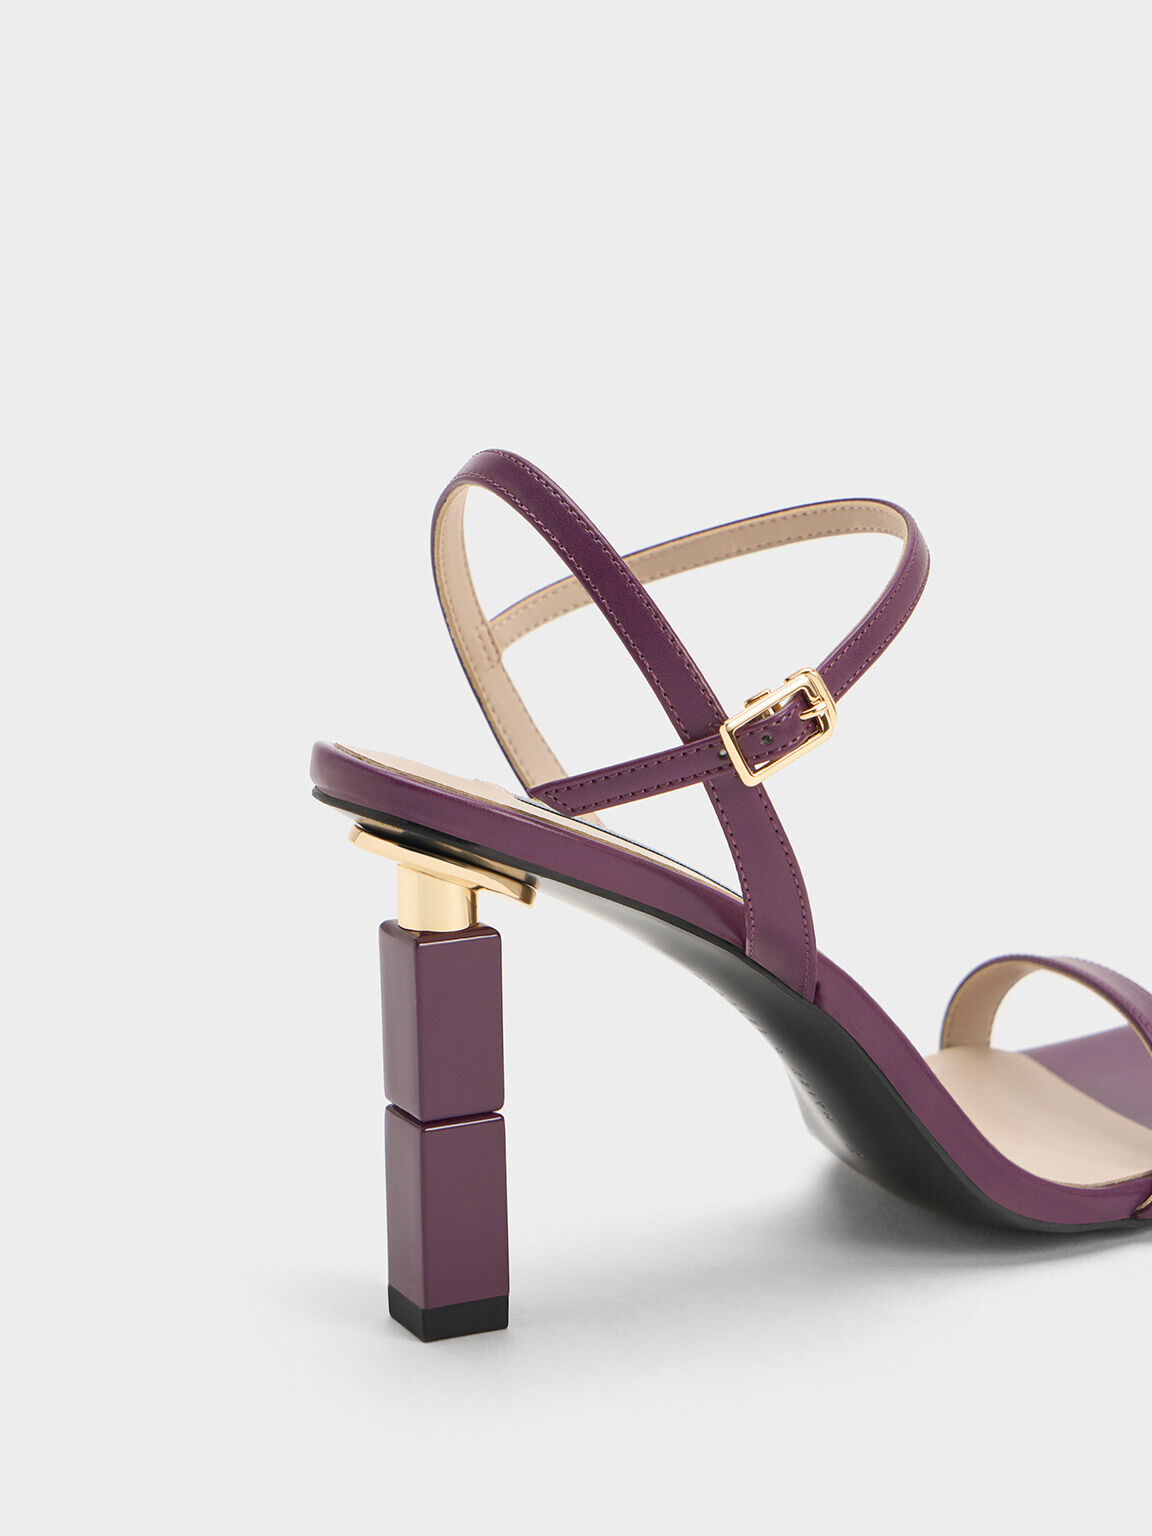 FEET RUNNER Women's Latest Stylish Comfortable Purple Heel Sandals for Girls